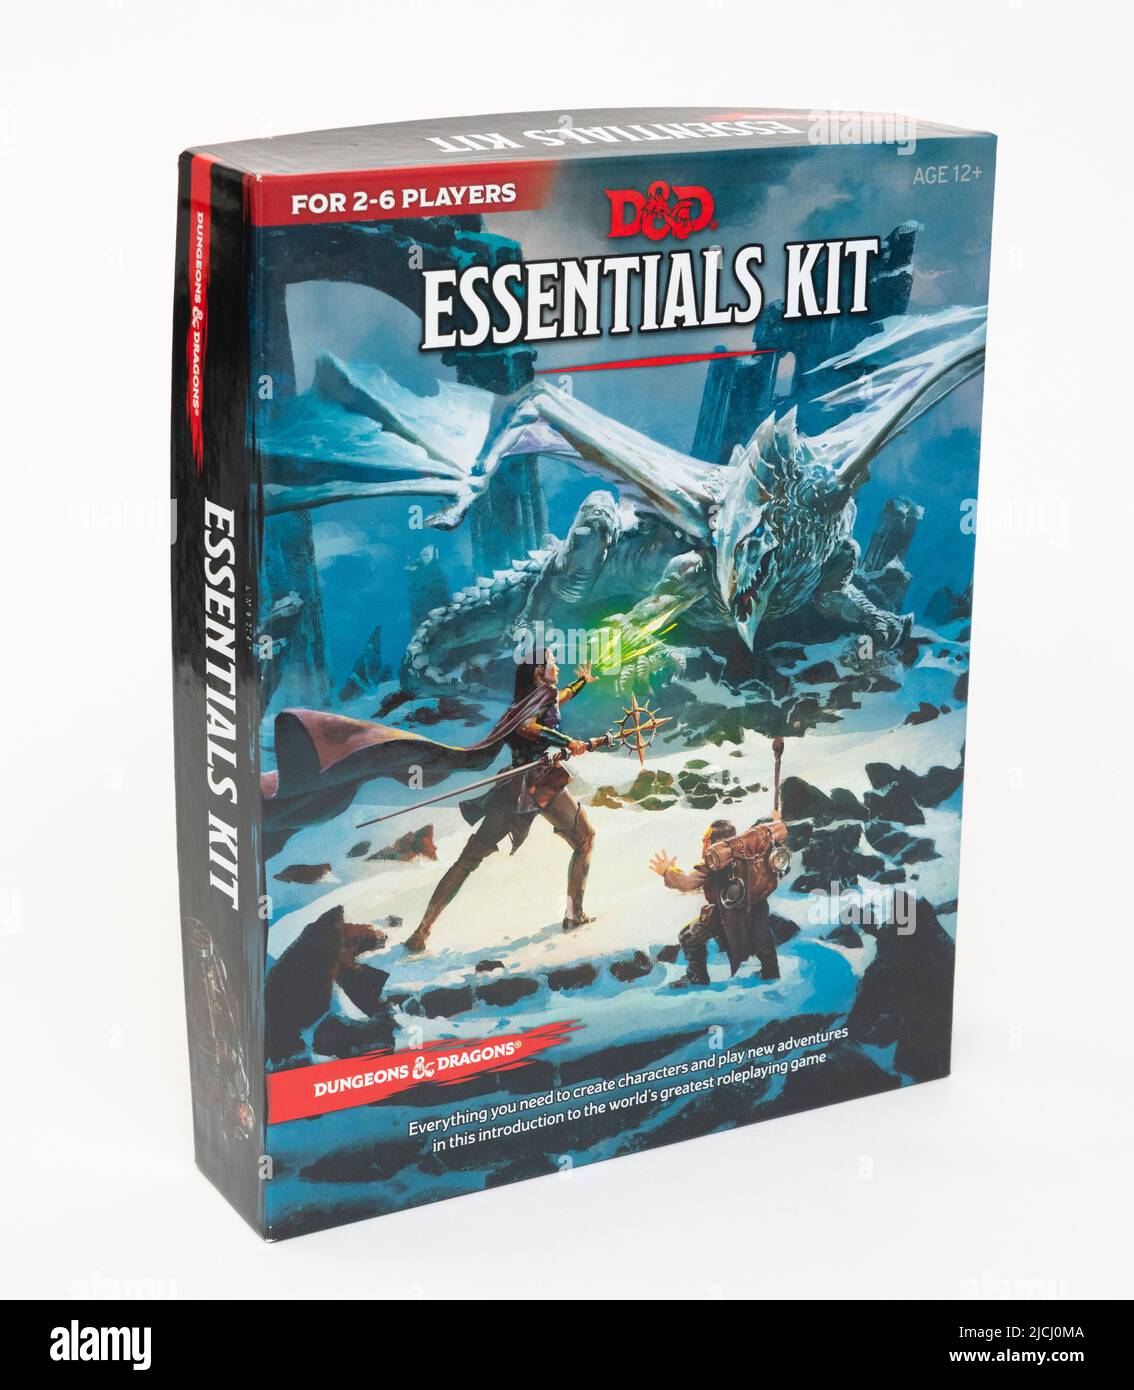 Il kit Essentials per Dungeons e Dragons. Foto Stock